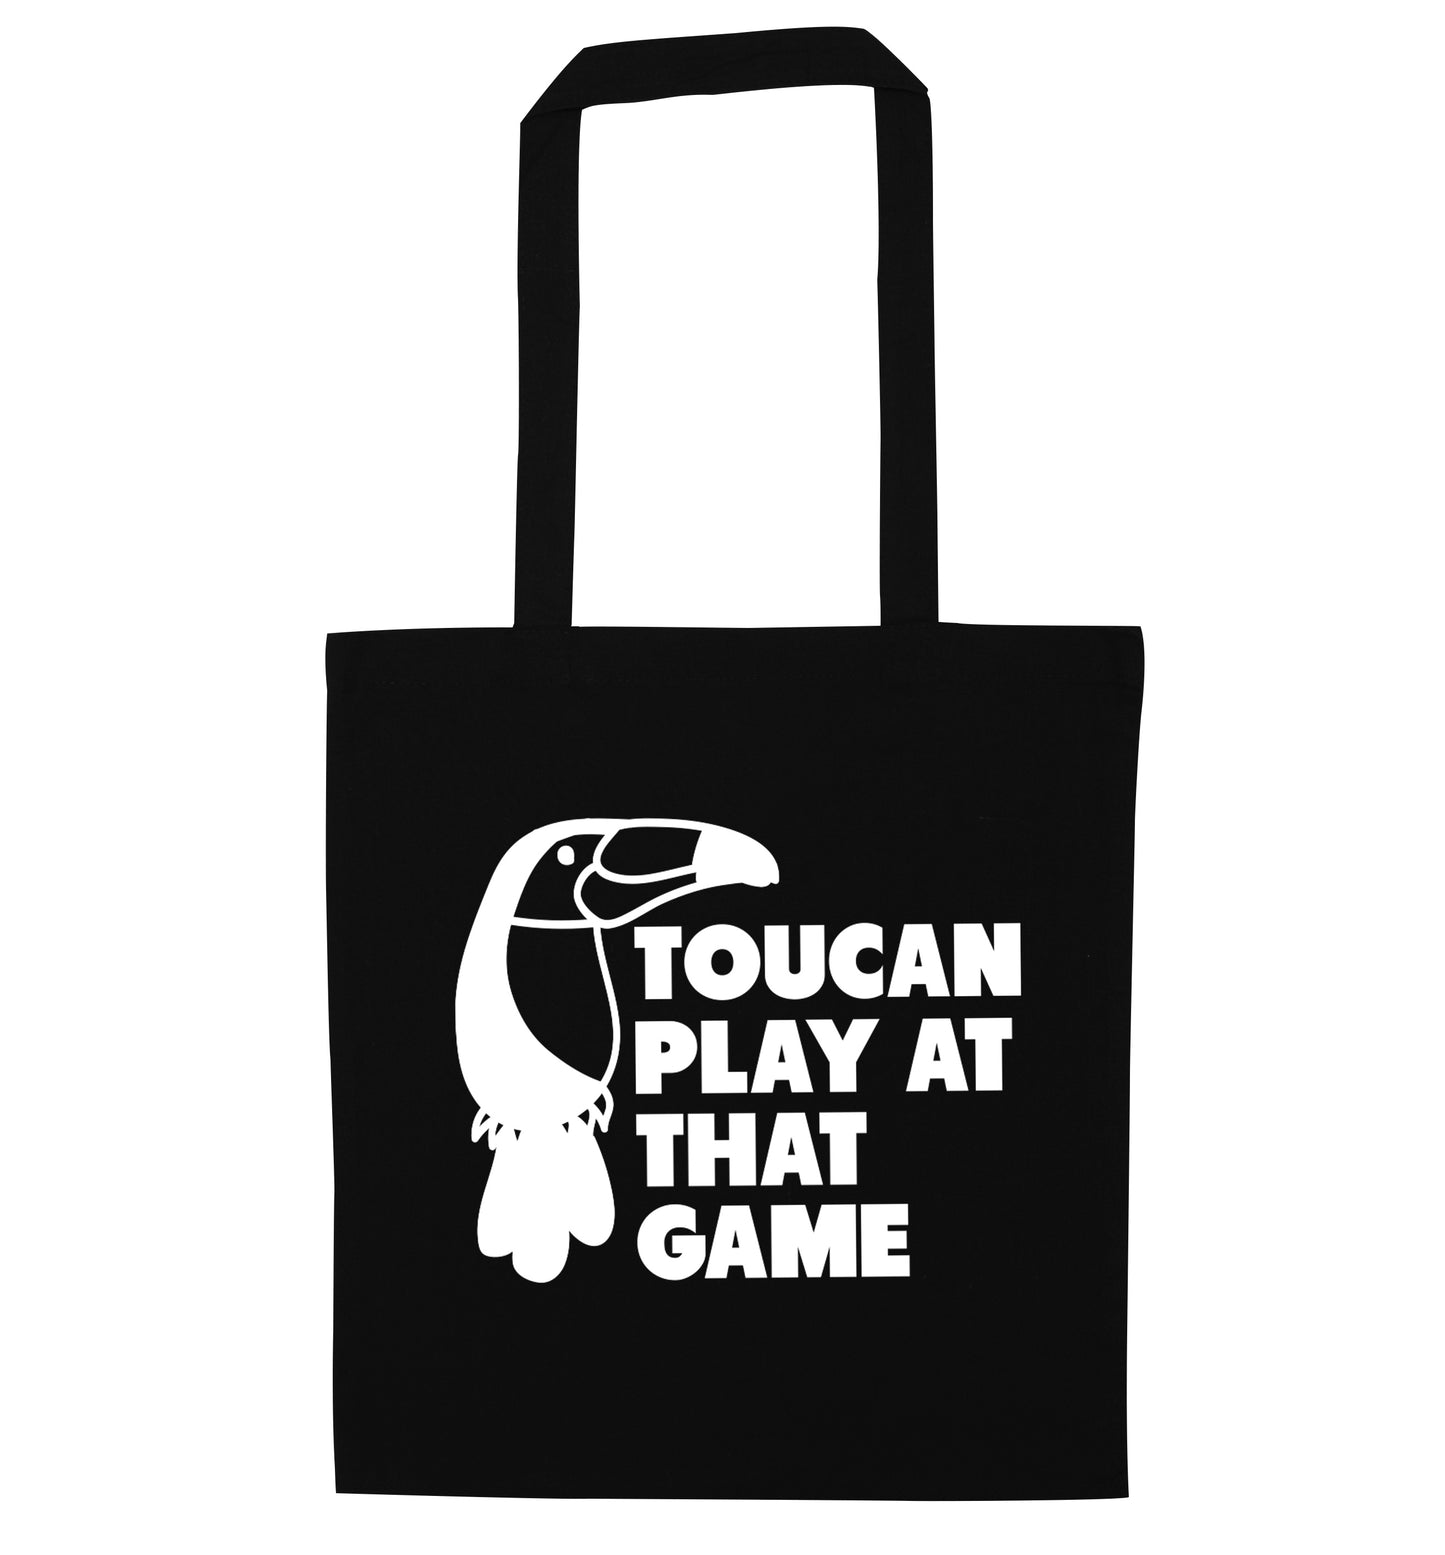 Toucan play at that game black tote bag